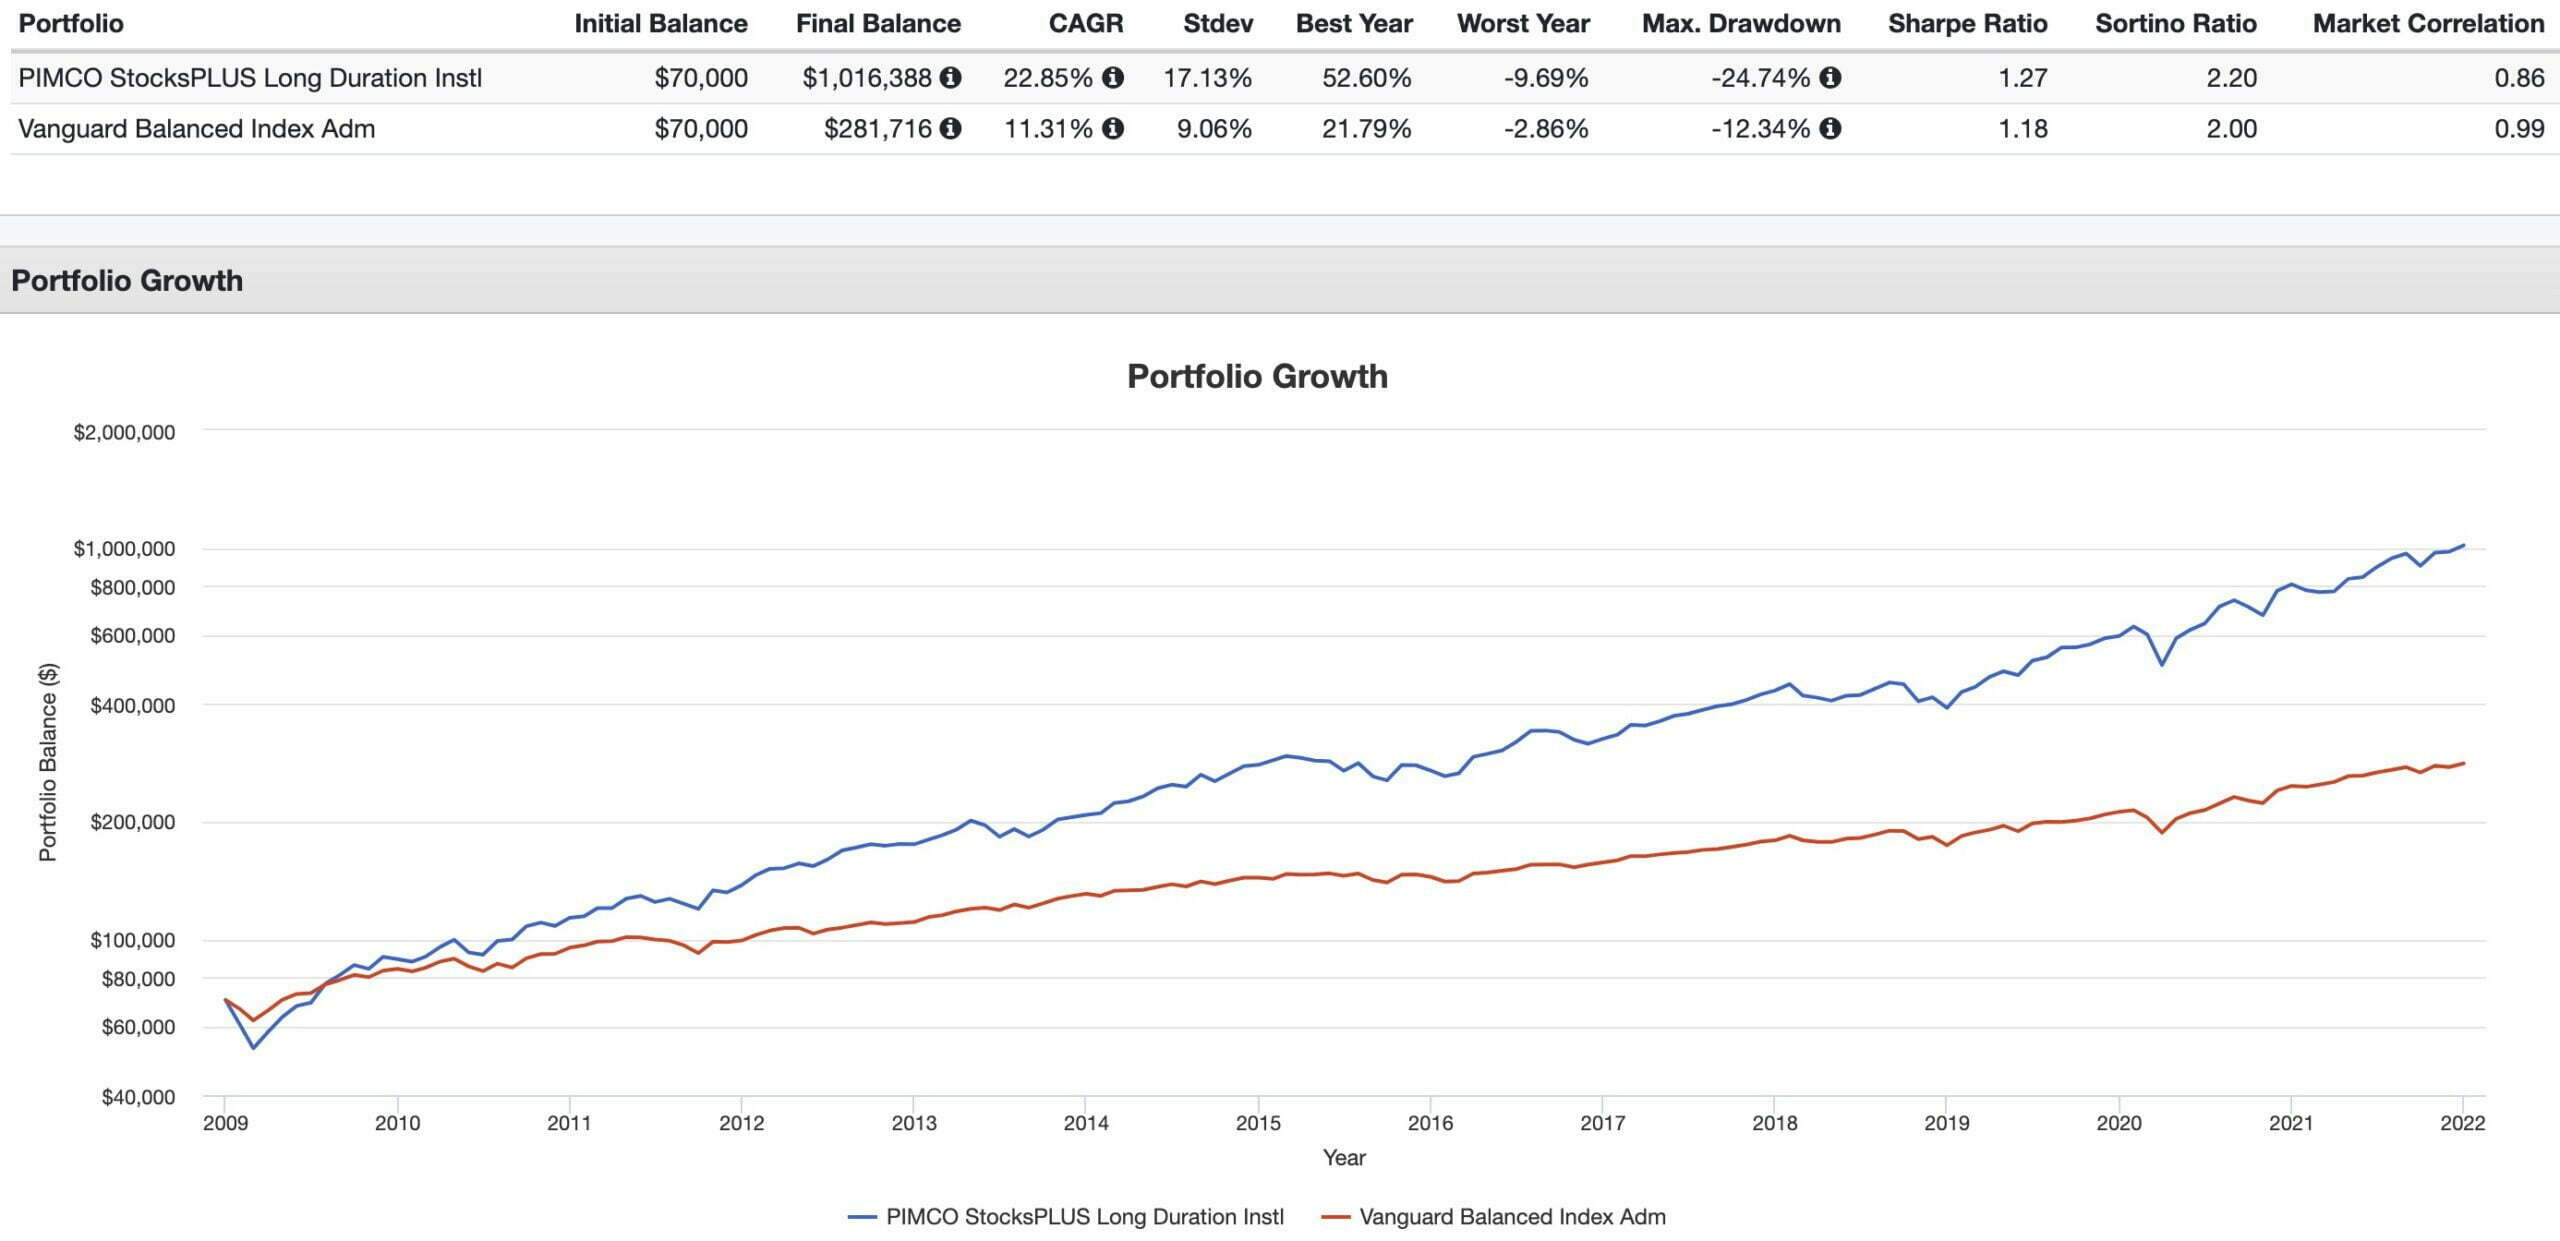 PIMCO StocksPLUS Long Duration PSLDX 100/100 vs Vanguard Balanced Index 60/40 Portfolio from 2009 until 2021 Performance Summary Returns